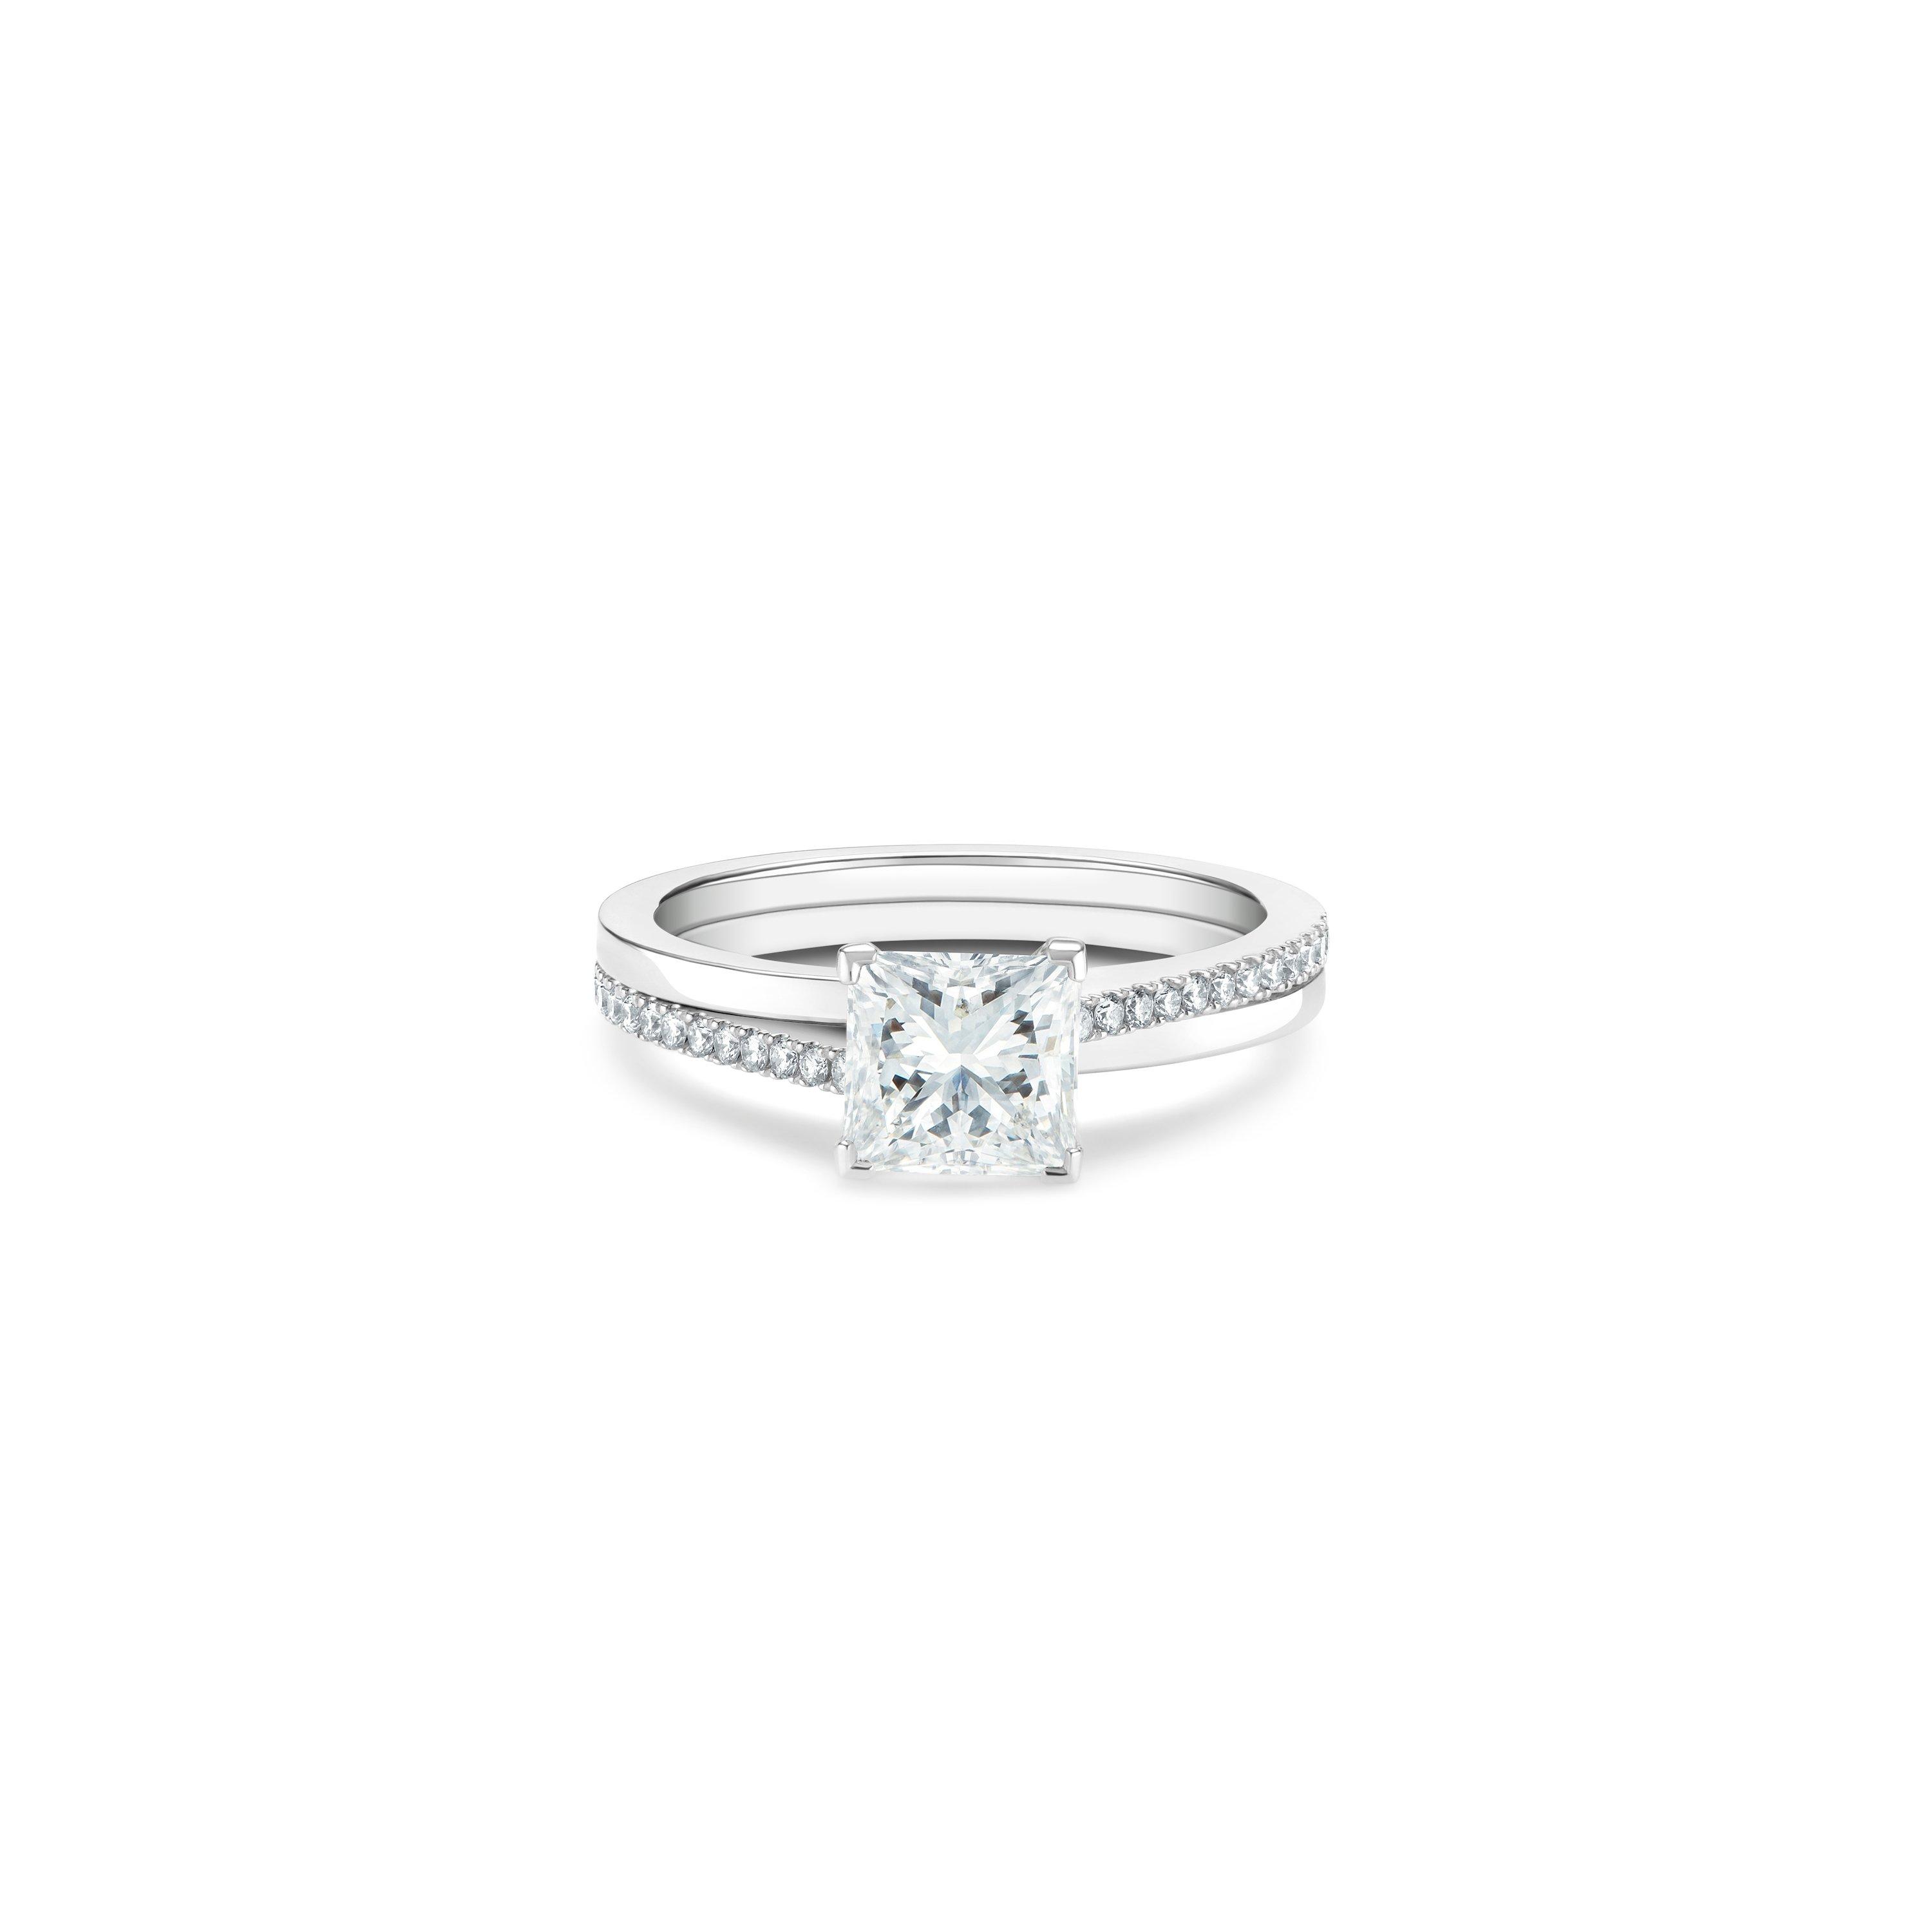 The Promise princess-cut diamond ring